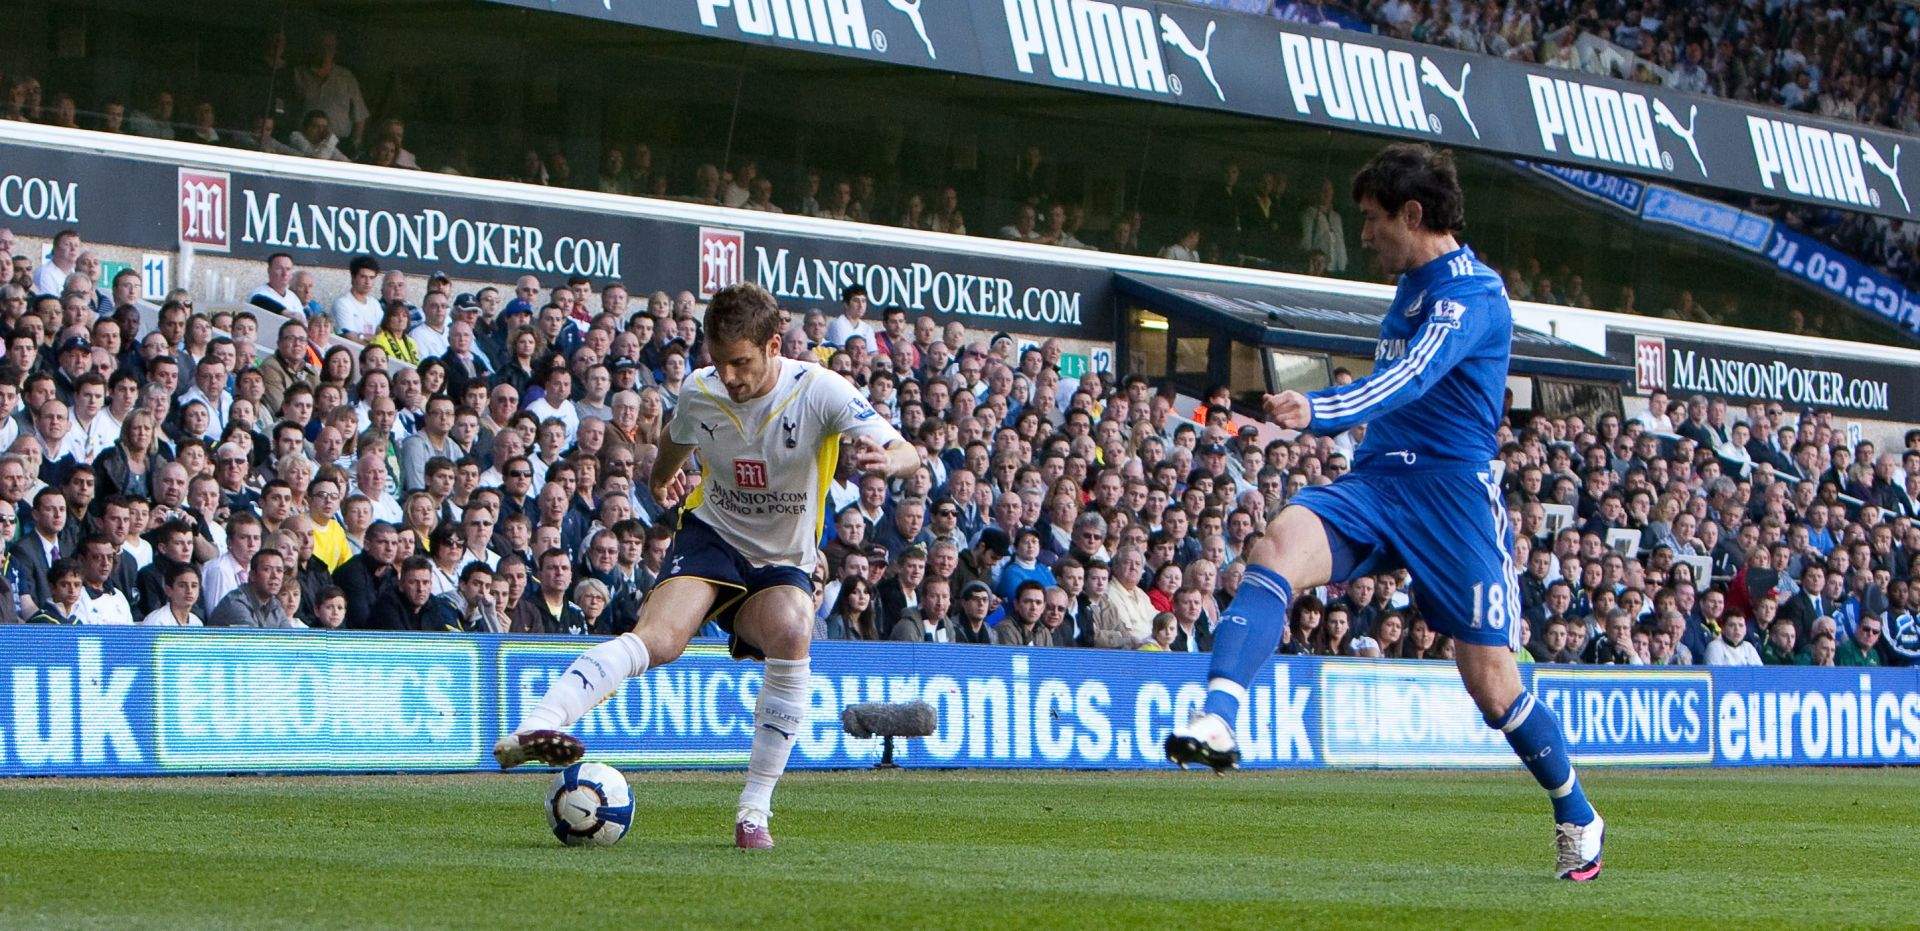 Football - Barclays Premiership - Tottenham Hotspur v Chelsea - Sat 17 Apr 2010 - White Hart Lance - London